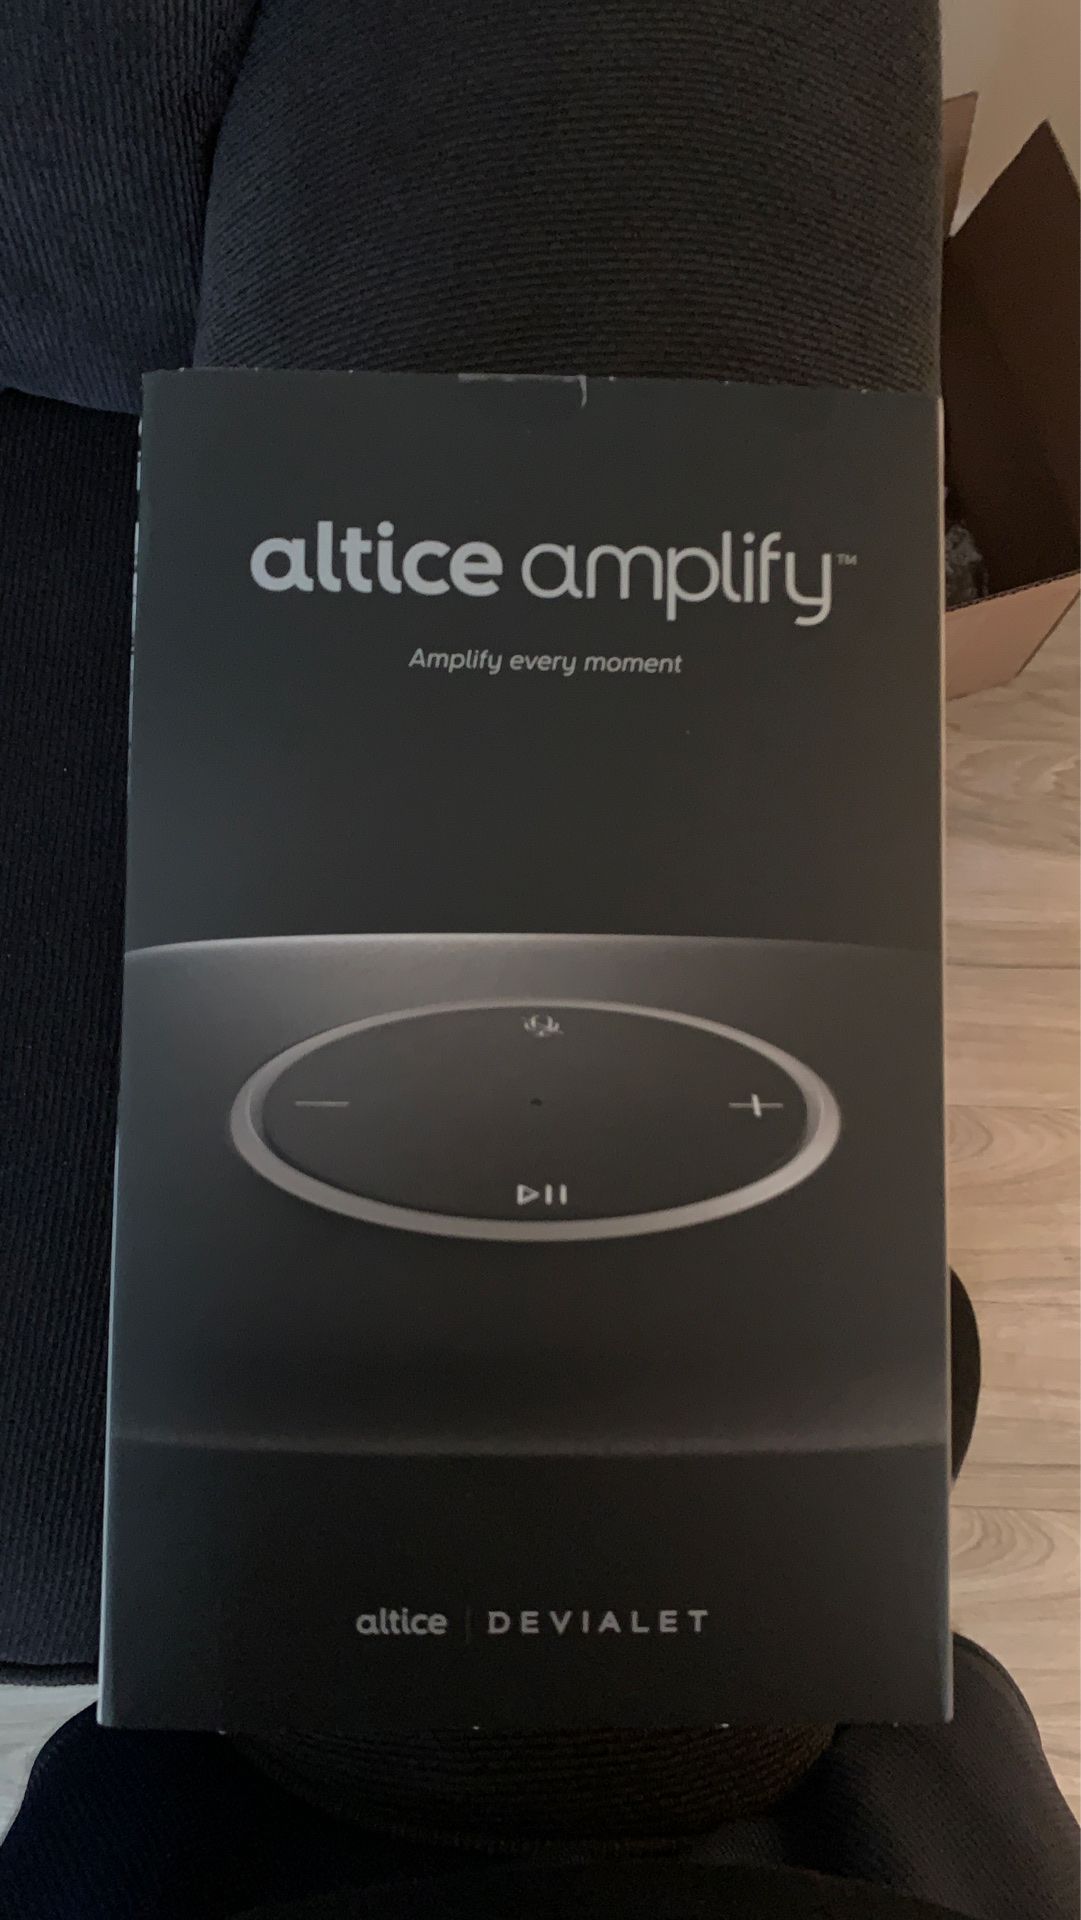 Altice amplify